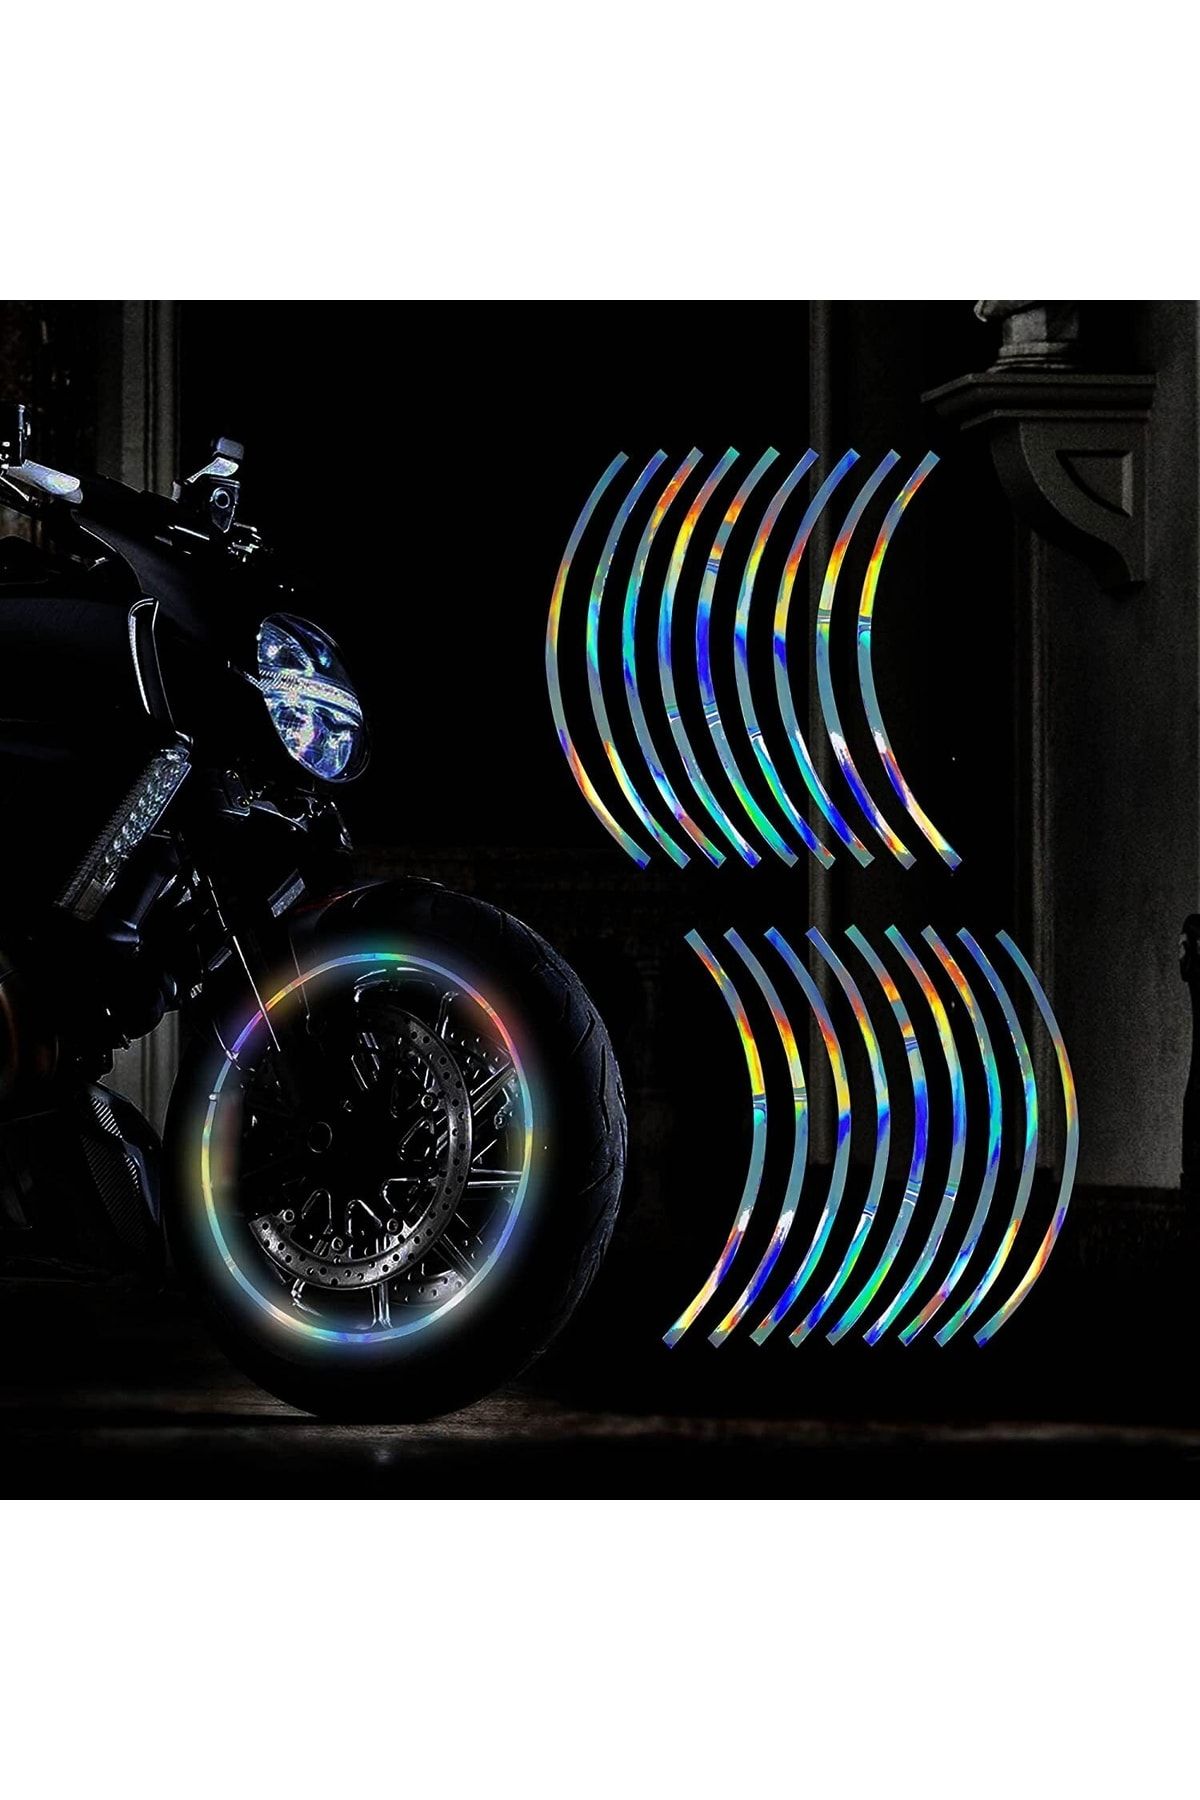 ÖZKAŞ Hologram Tekerlek Şerit Moto Araba Uyumlu Oto Aksesuar Motorsiklet Aksesuar Sticker